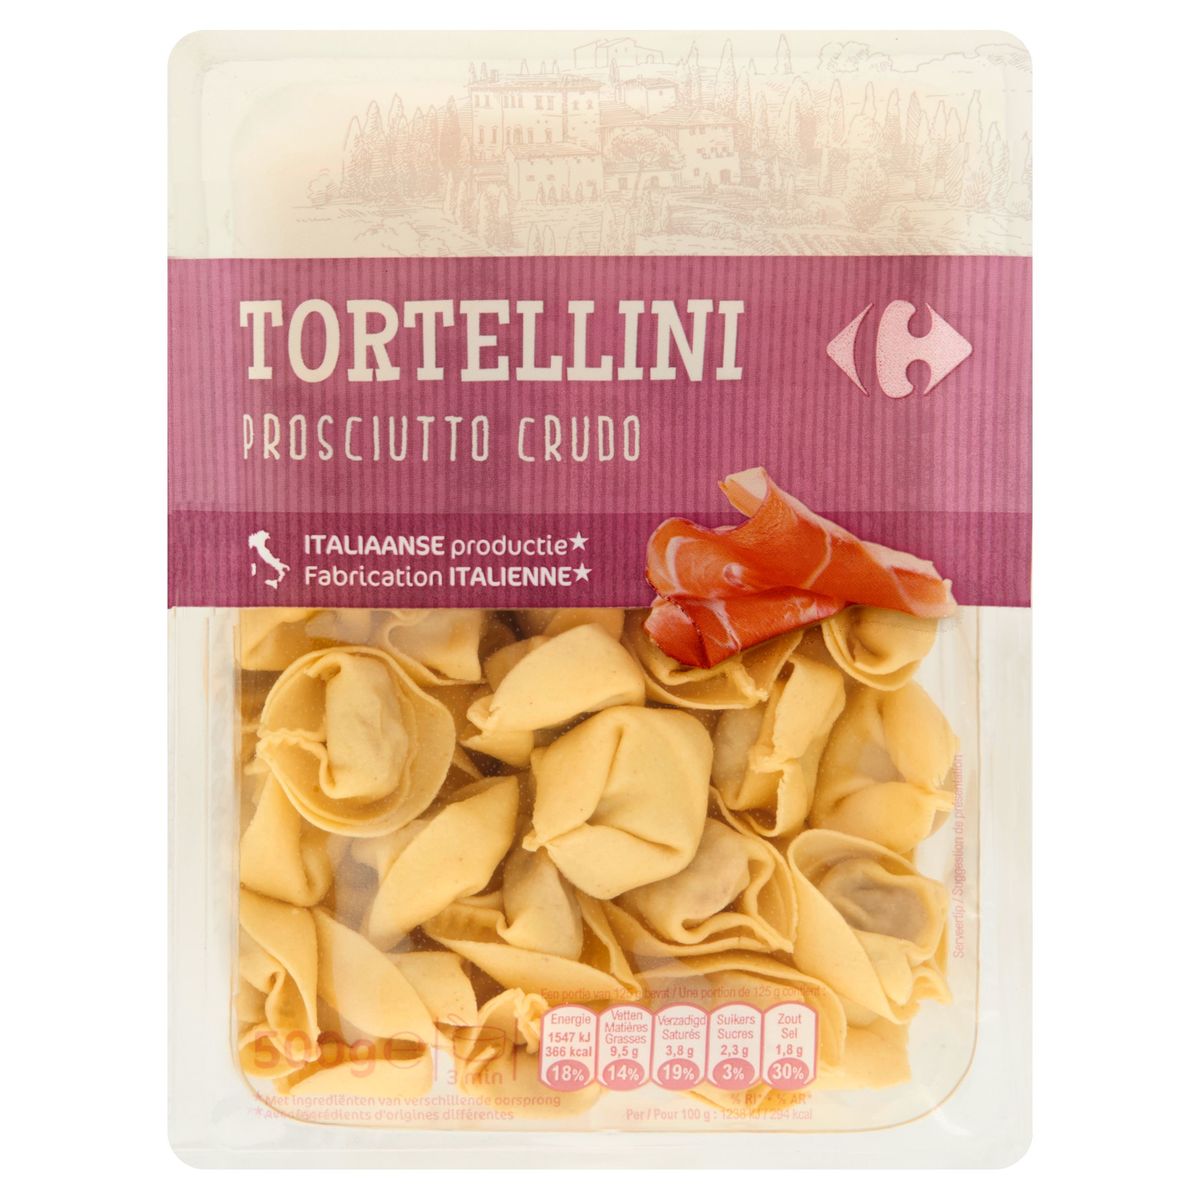 Carrefour Extra Tortellini Prosciutto Crudo 500 g